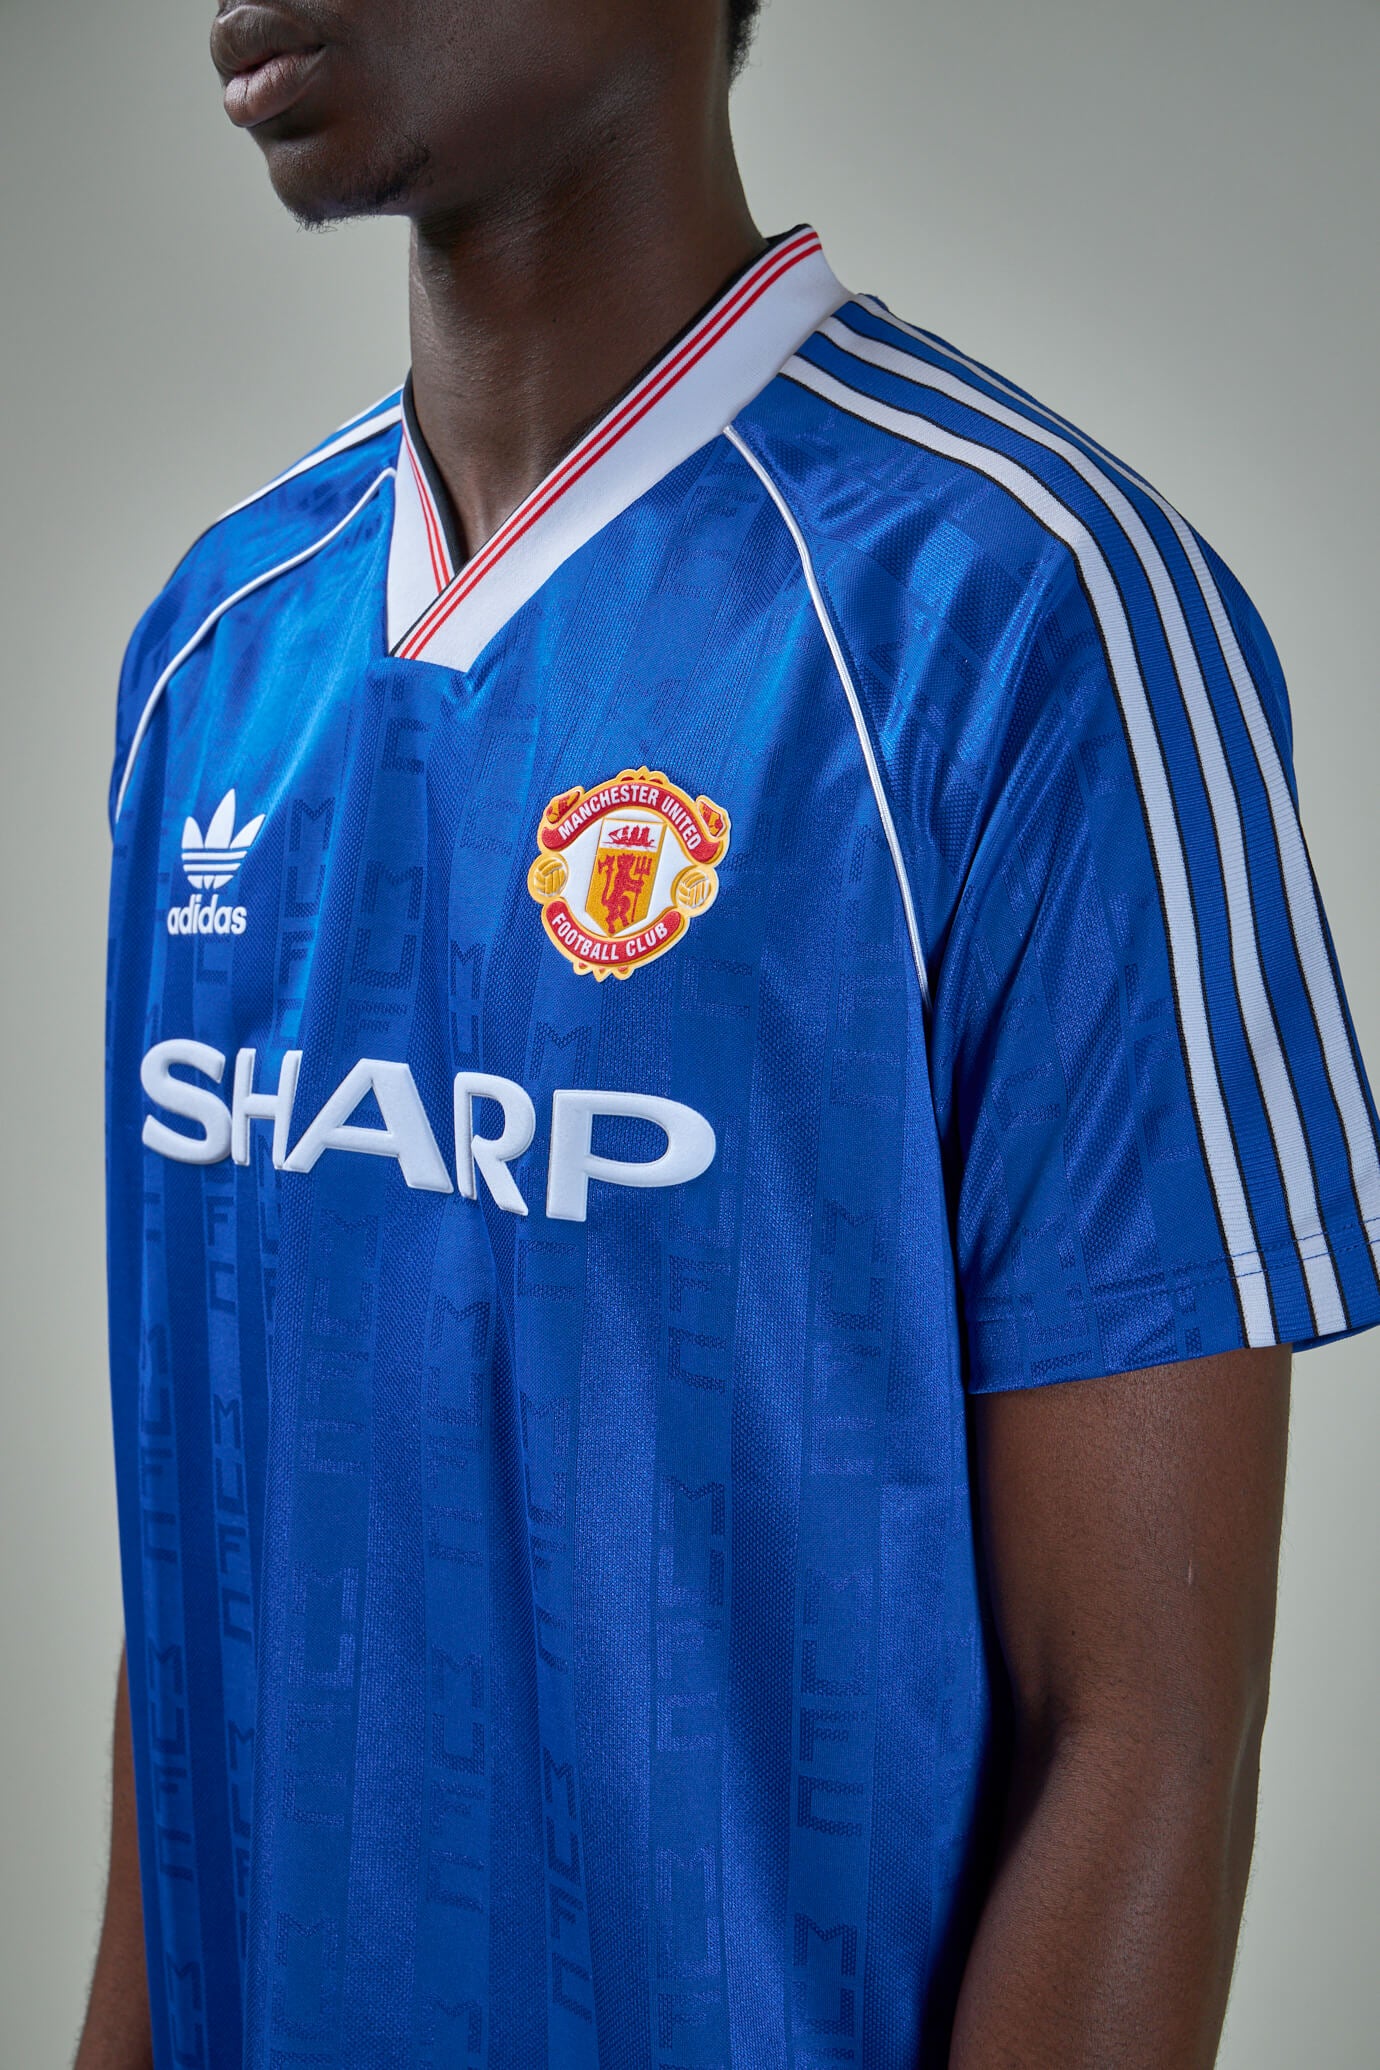 adidas Originals Manchester United 89' third kit in blue